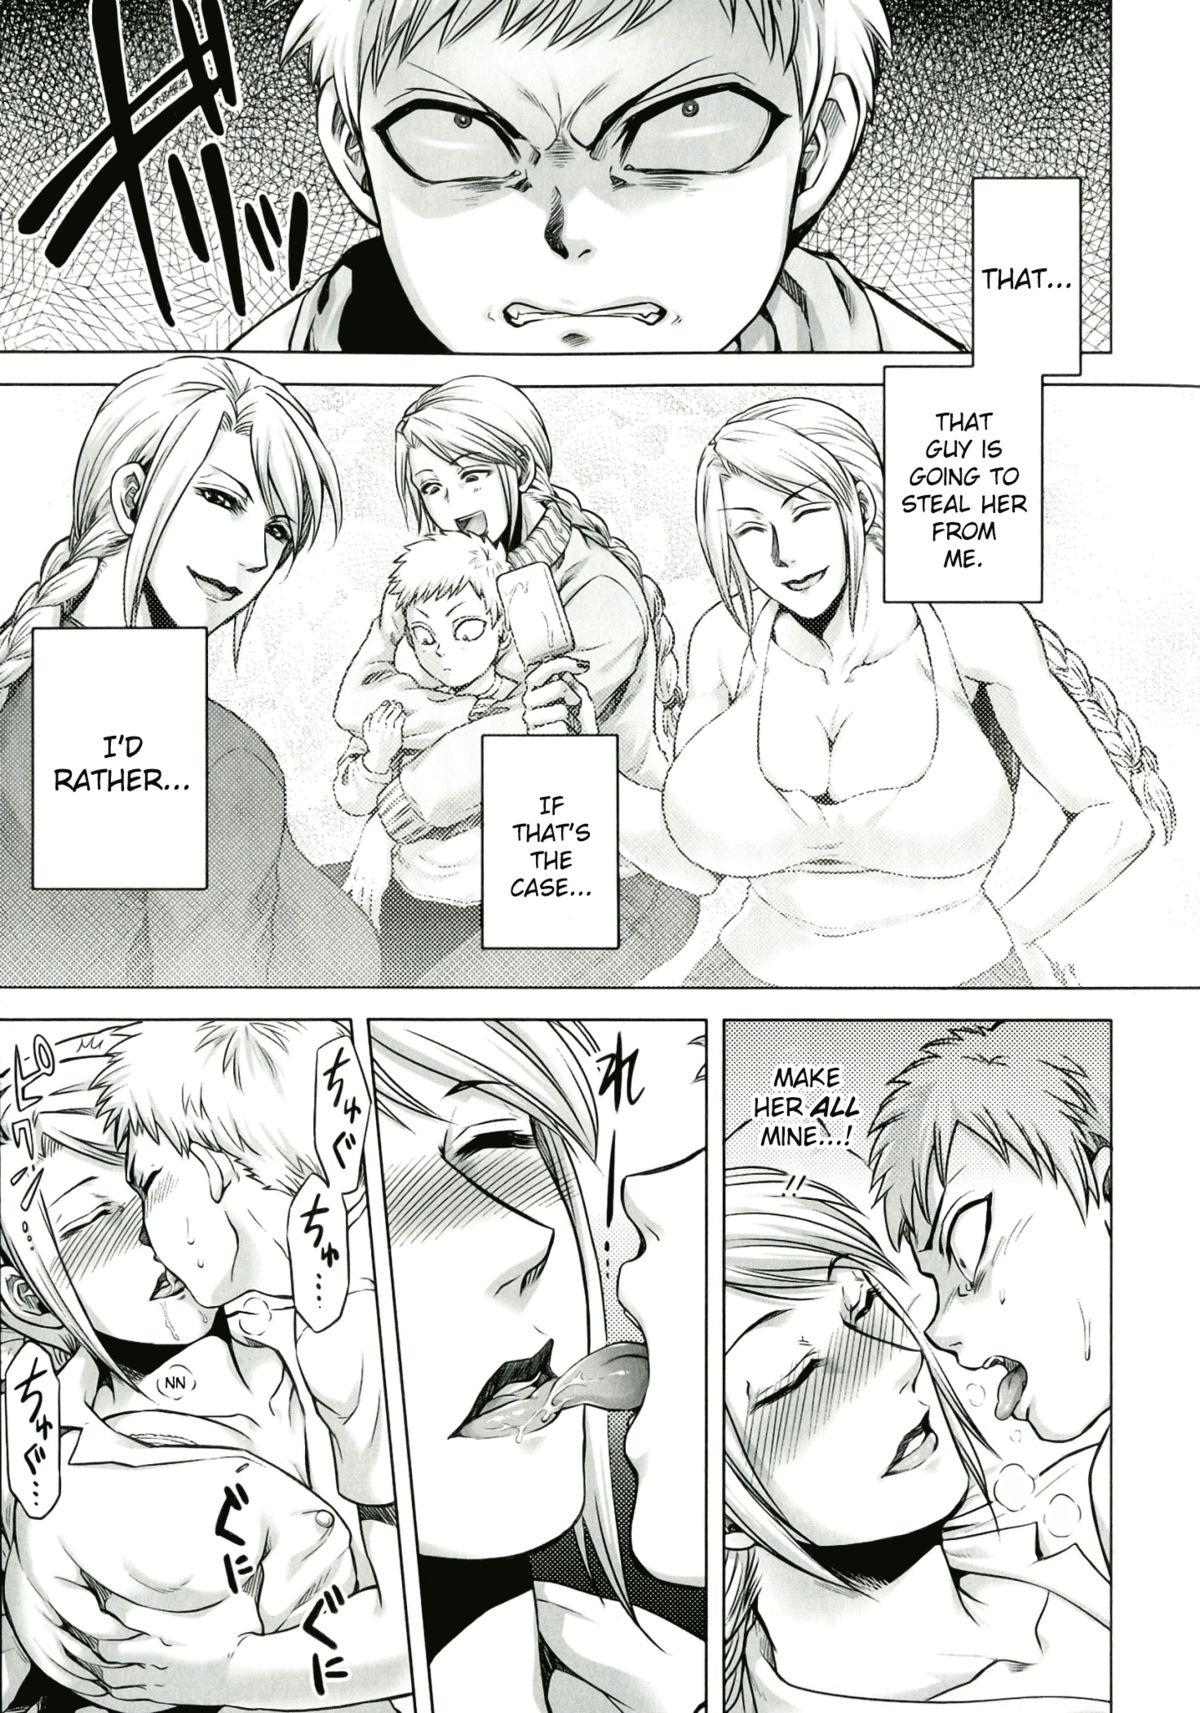 Brunet Akui no Hako Ch. 1-2, 8 3some - Page 11